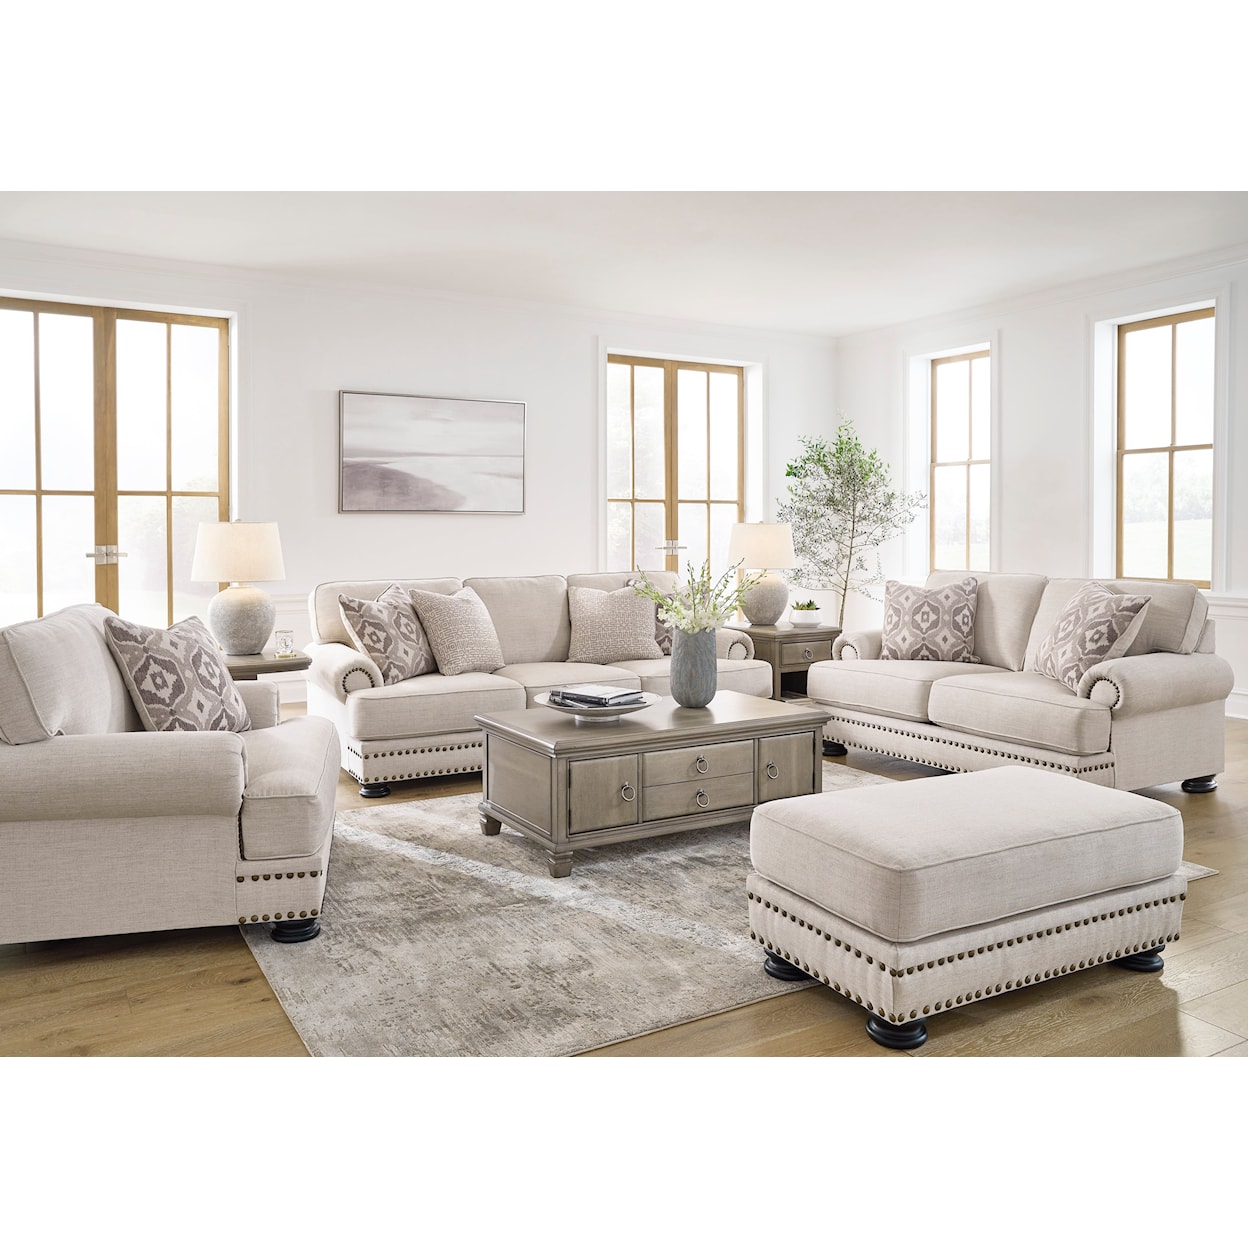 Ashley Furniture Benchcraft Merrimore Living Room Set